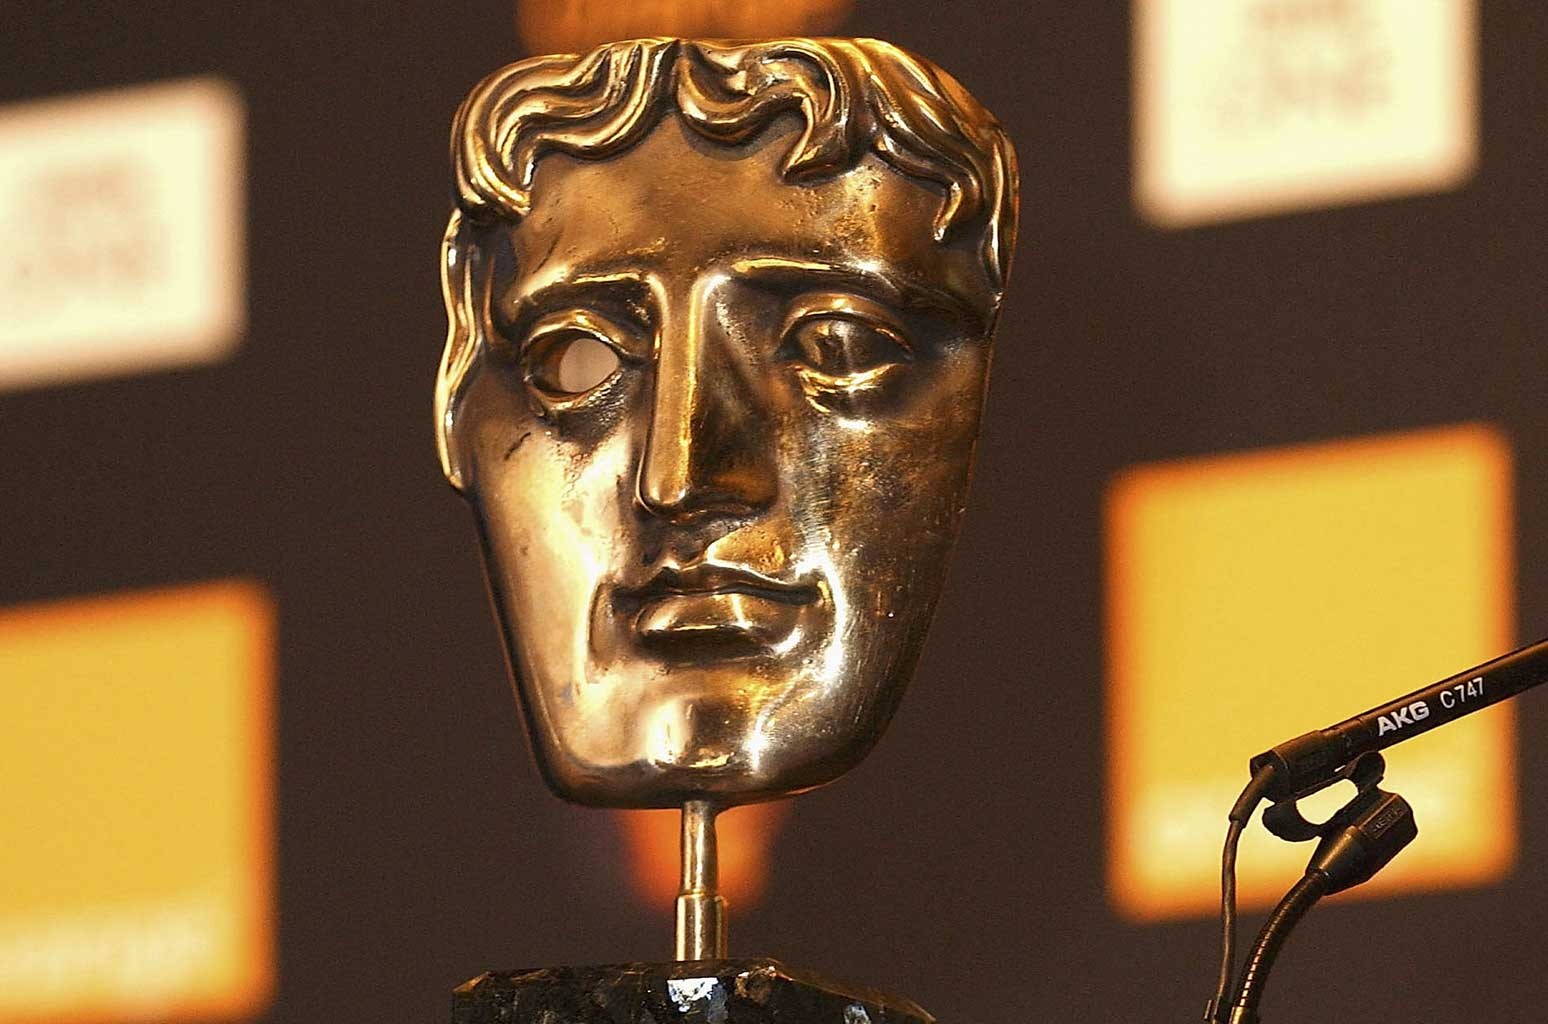 See full list of winners at 2021 BAFTA awards